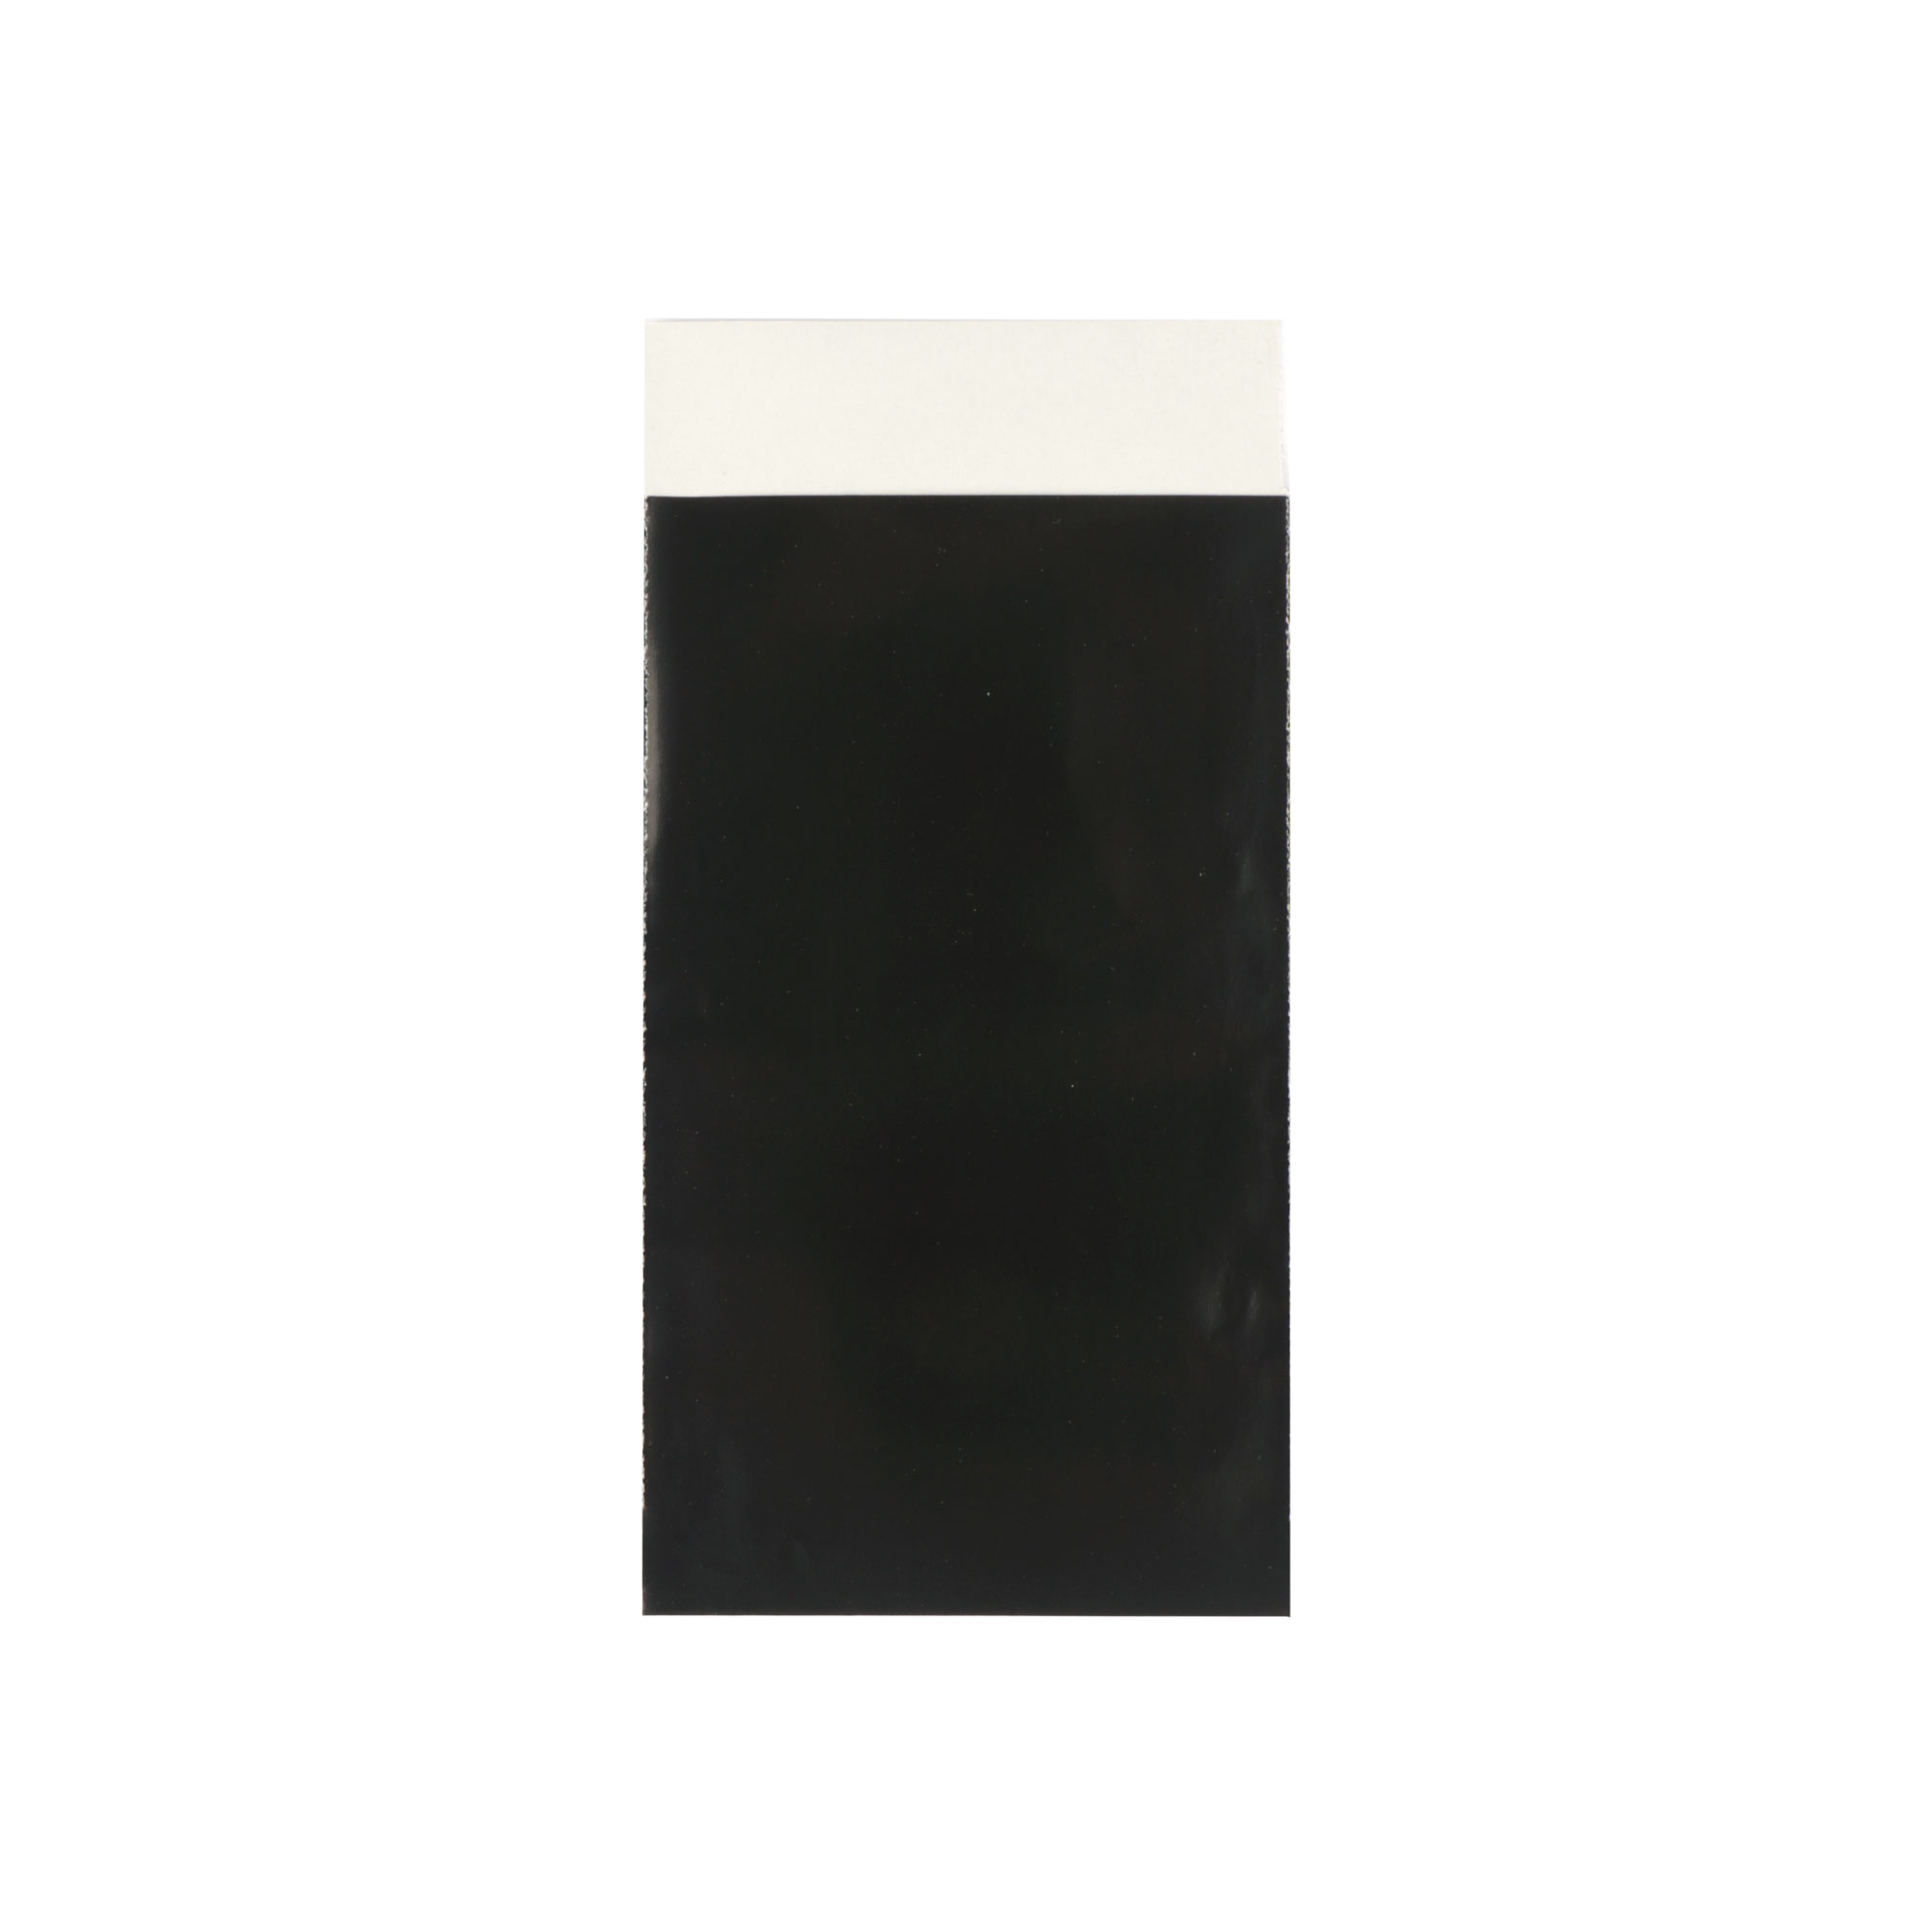 Afbeelding van Ds à 200 kadozak 7x13 cm Royal zwart (uc)